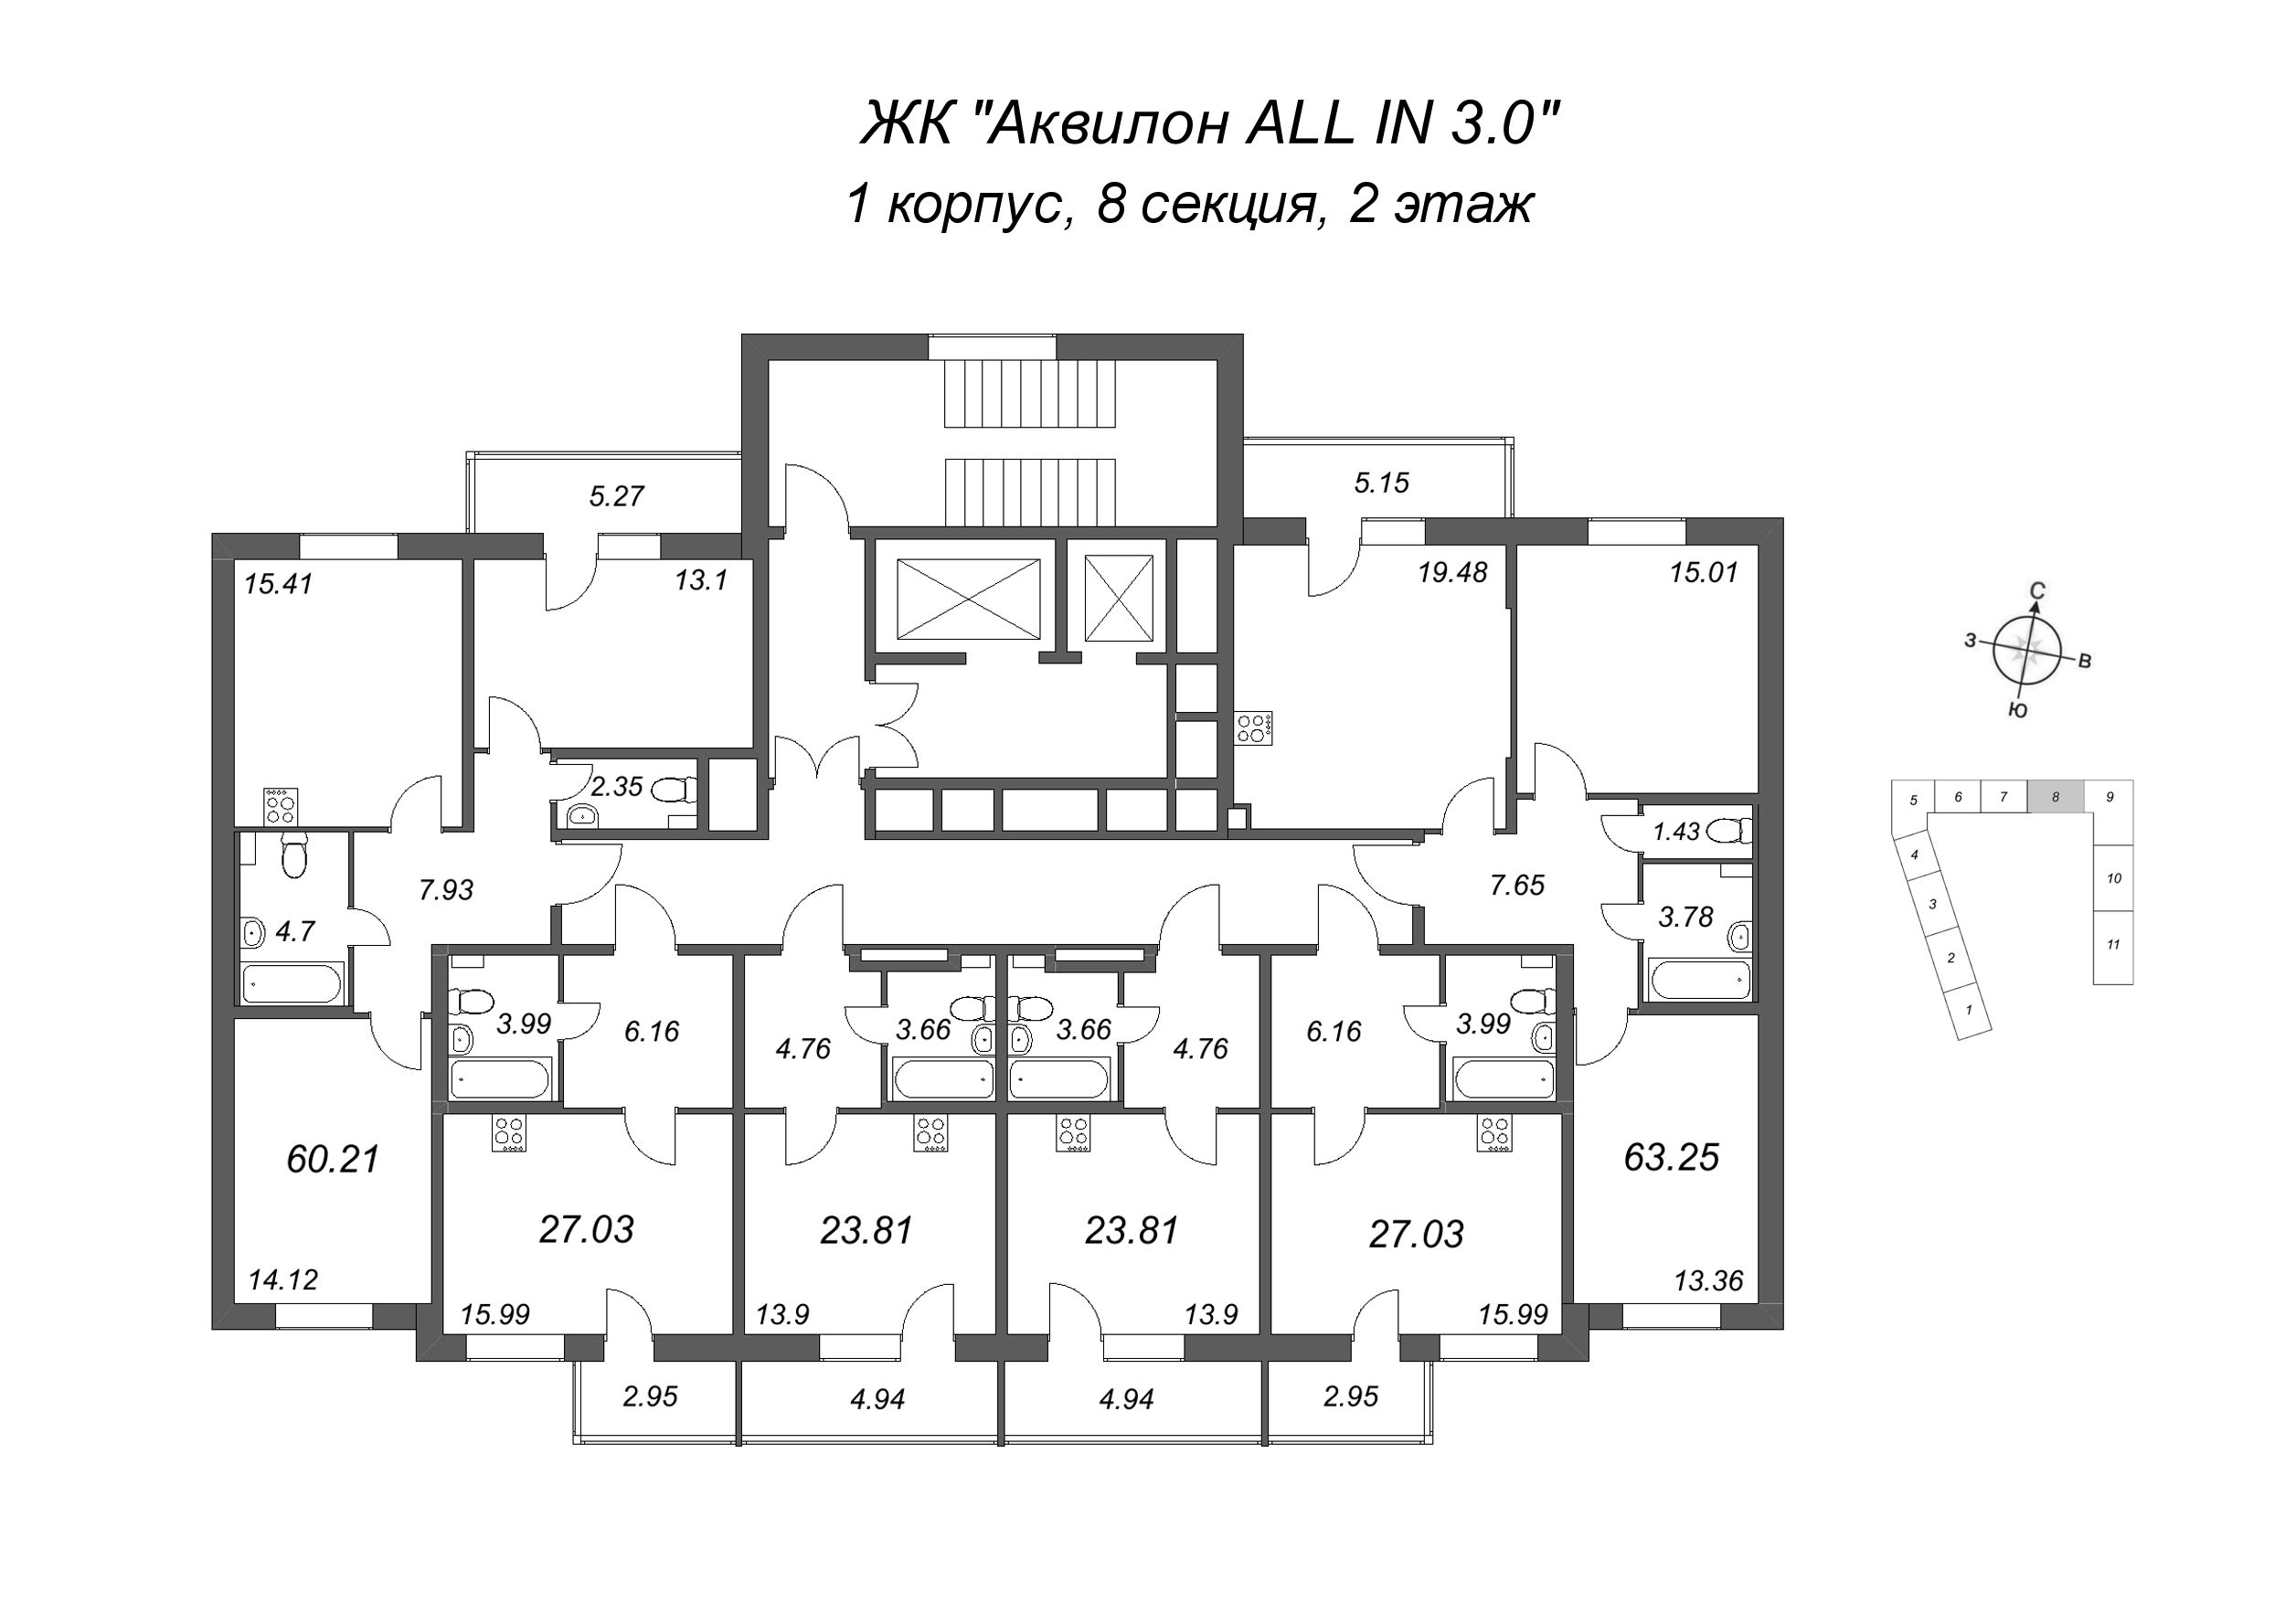 3-комнатная (Евро) квартира, 60.21 м² - планировка этажа